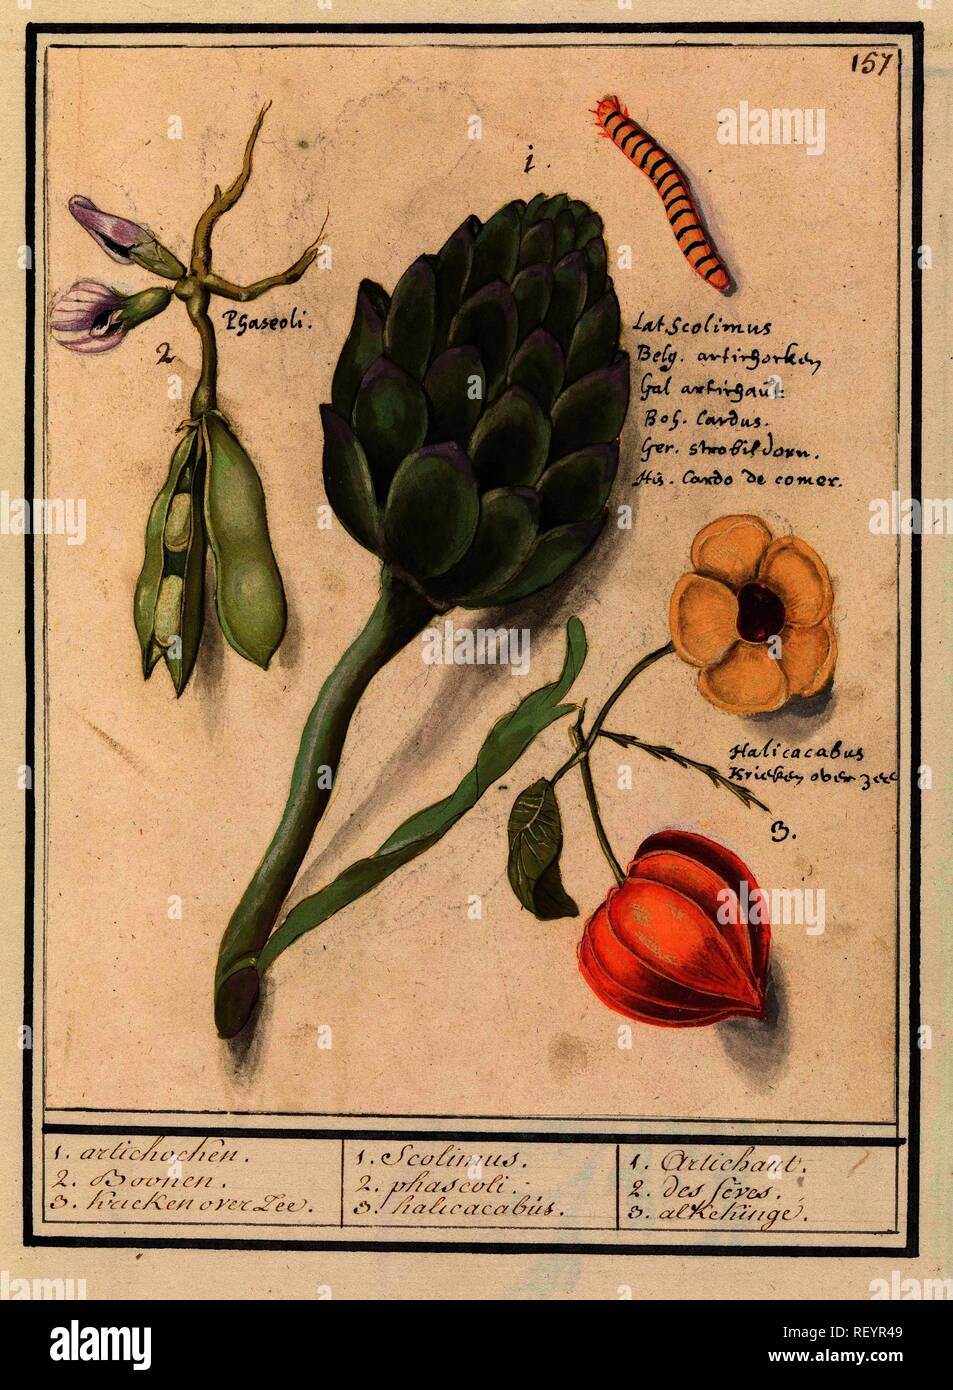 Artisjok (Cynara scolymus), tuinbonen (Vicia faba) en lampionplant (Physalis). 1. artichocken. 2. Boonen. 3. Krieken over Zee. / 1. Scolimus. 2. phascoli. 3. halicacabus. / 1. Artichaut. 2. des feves. 3. alkekinge (title on object). Draughtsman: Anselmus Boëtius de Boodt. Draughtsman: Elias Verhulst. Dating: 1596 - 1610. Place: Praag. Measurements: h 266 mm × w 177 mm. Museum: Rijksmuseum, Amsterdam. Stock Photo